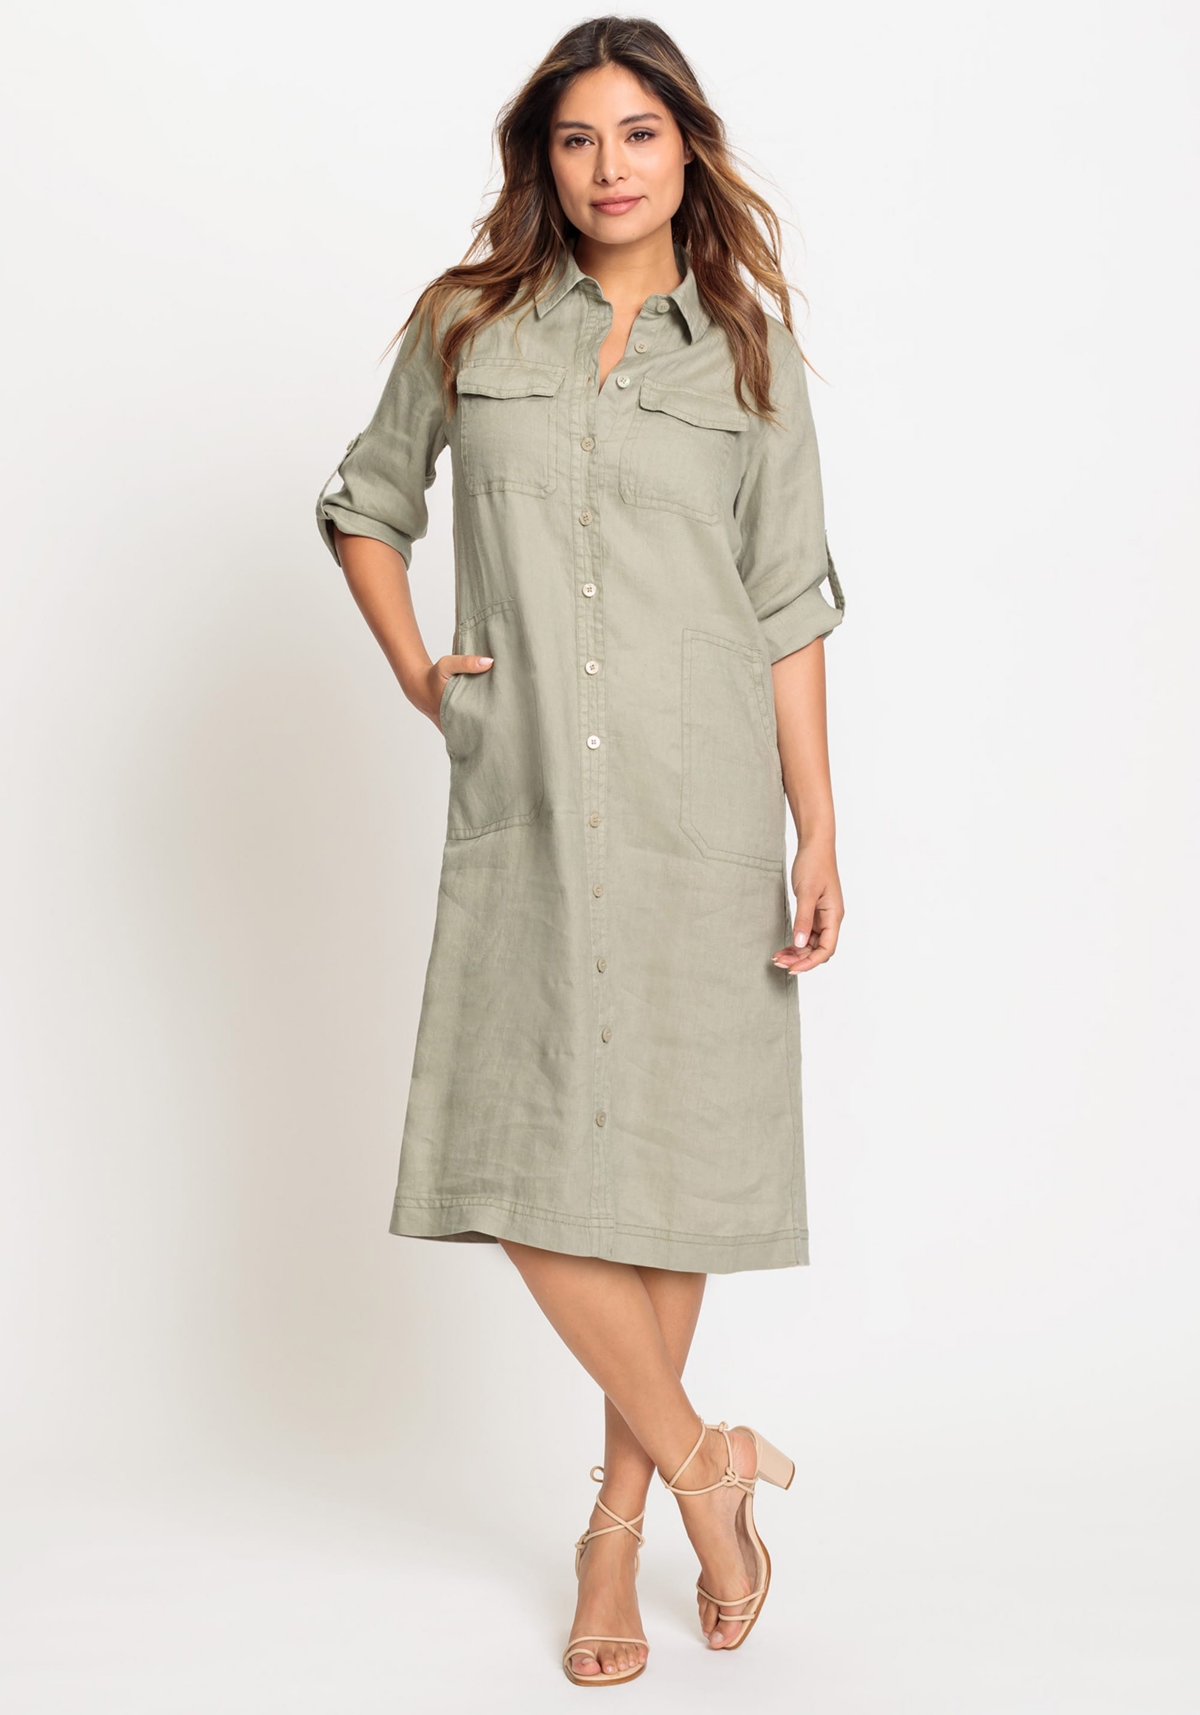 Women's 100% Linen 3/4 Sleeve Dress with Rolled Sleeve Tab Detail - Light khaki